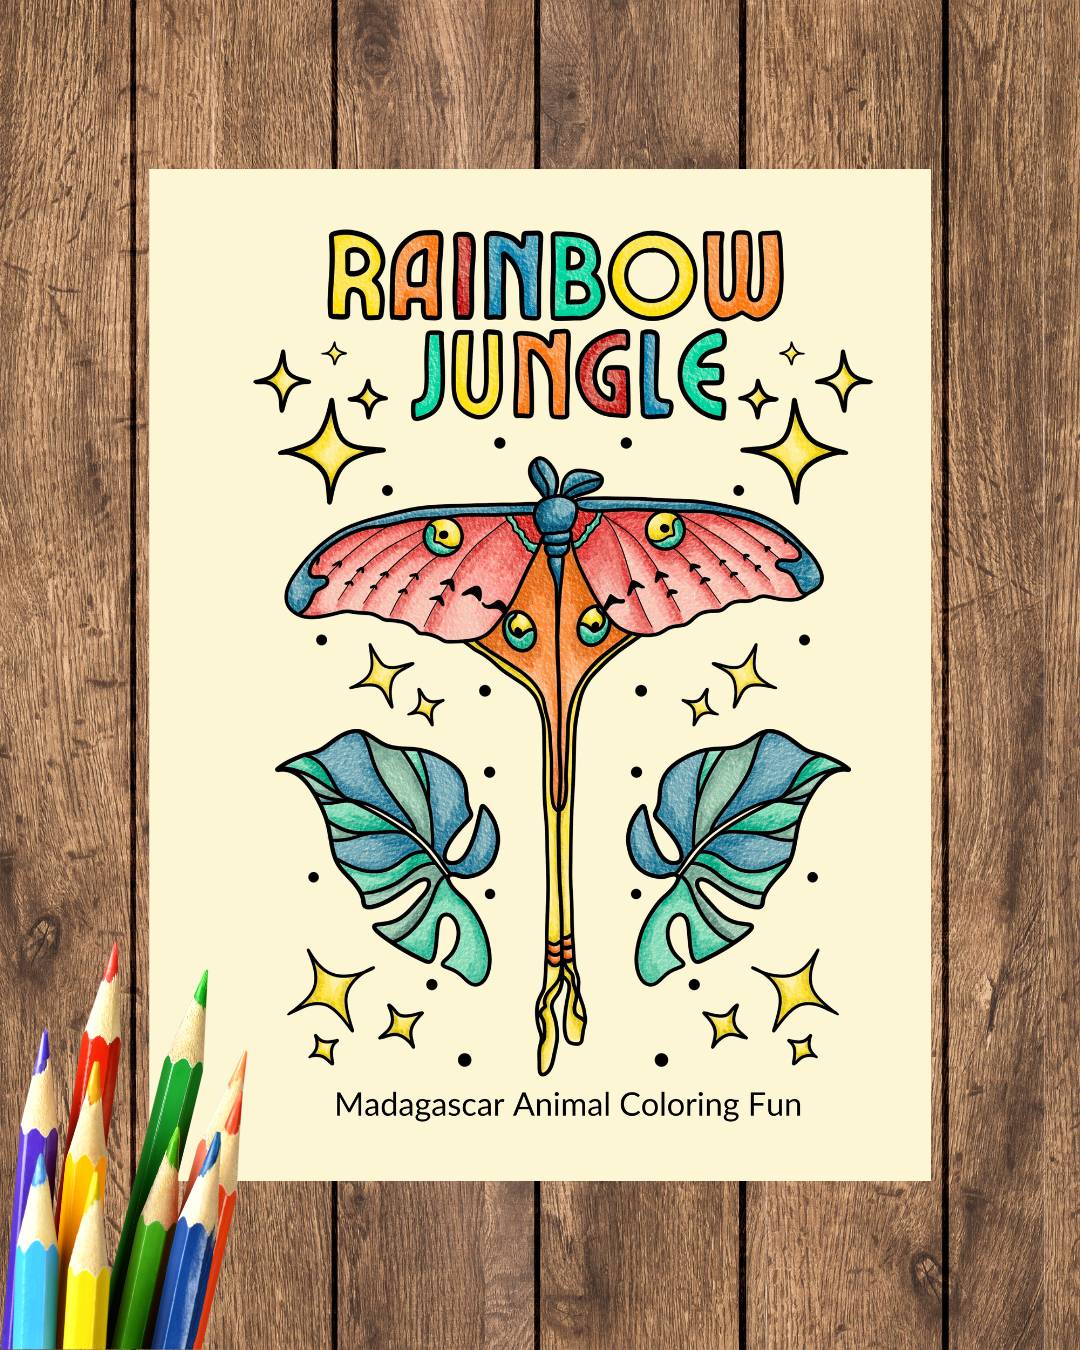 Rainbow Jungle Colouring Book - Colour the animals on Madagascar